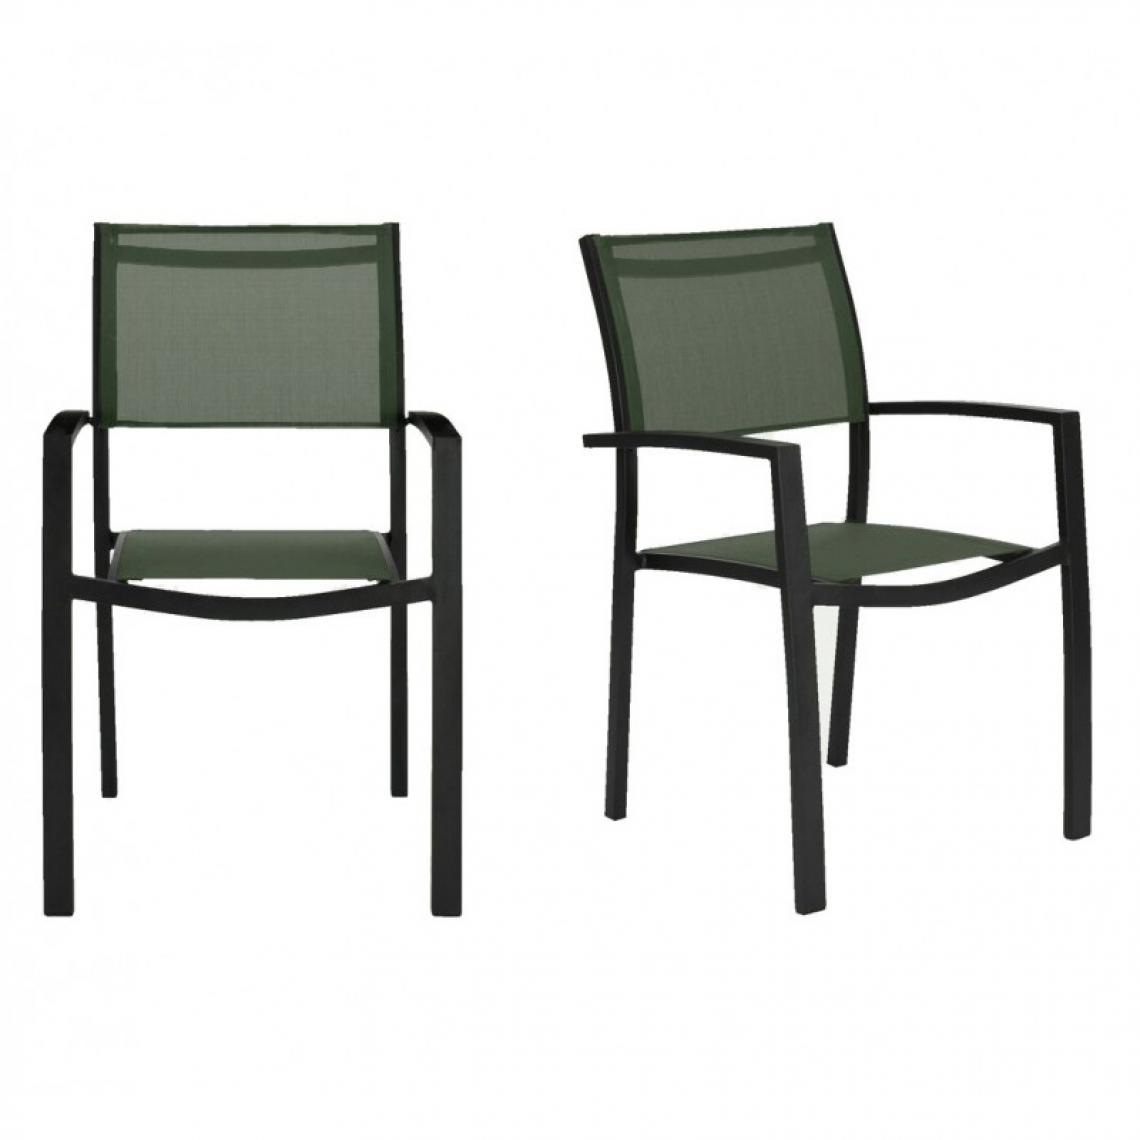 Meubletmoi - Lot de 2 chaises de jardin empilables en aluminium vert - LEXA 6504 - Chaises de jardin